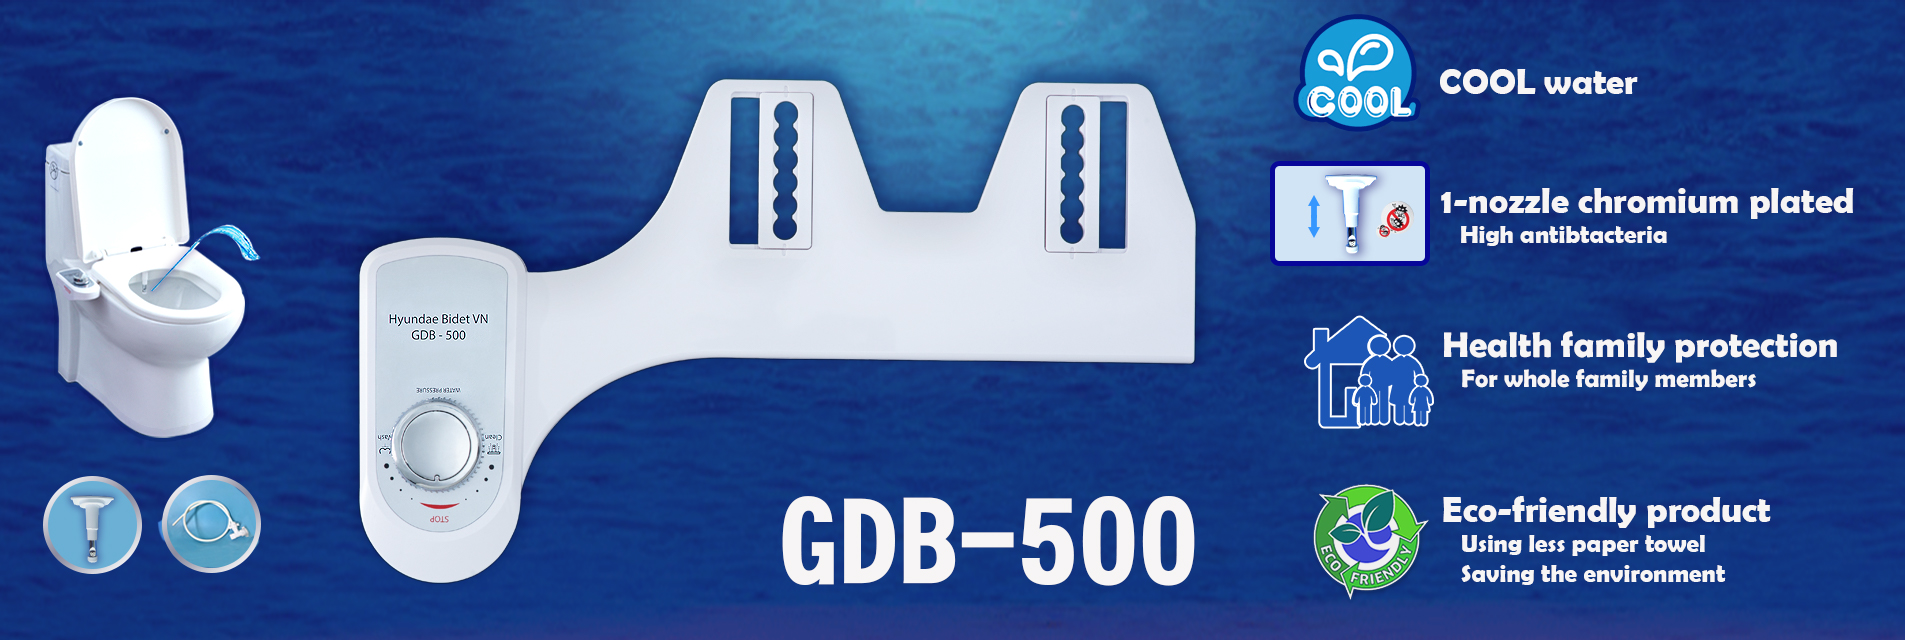 GDB-500 Basic and keep protection family